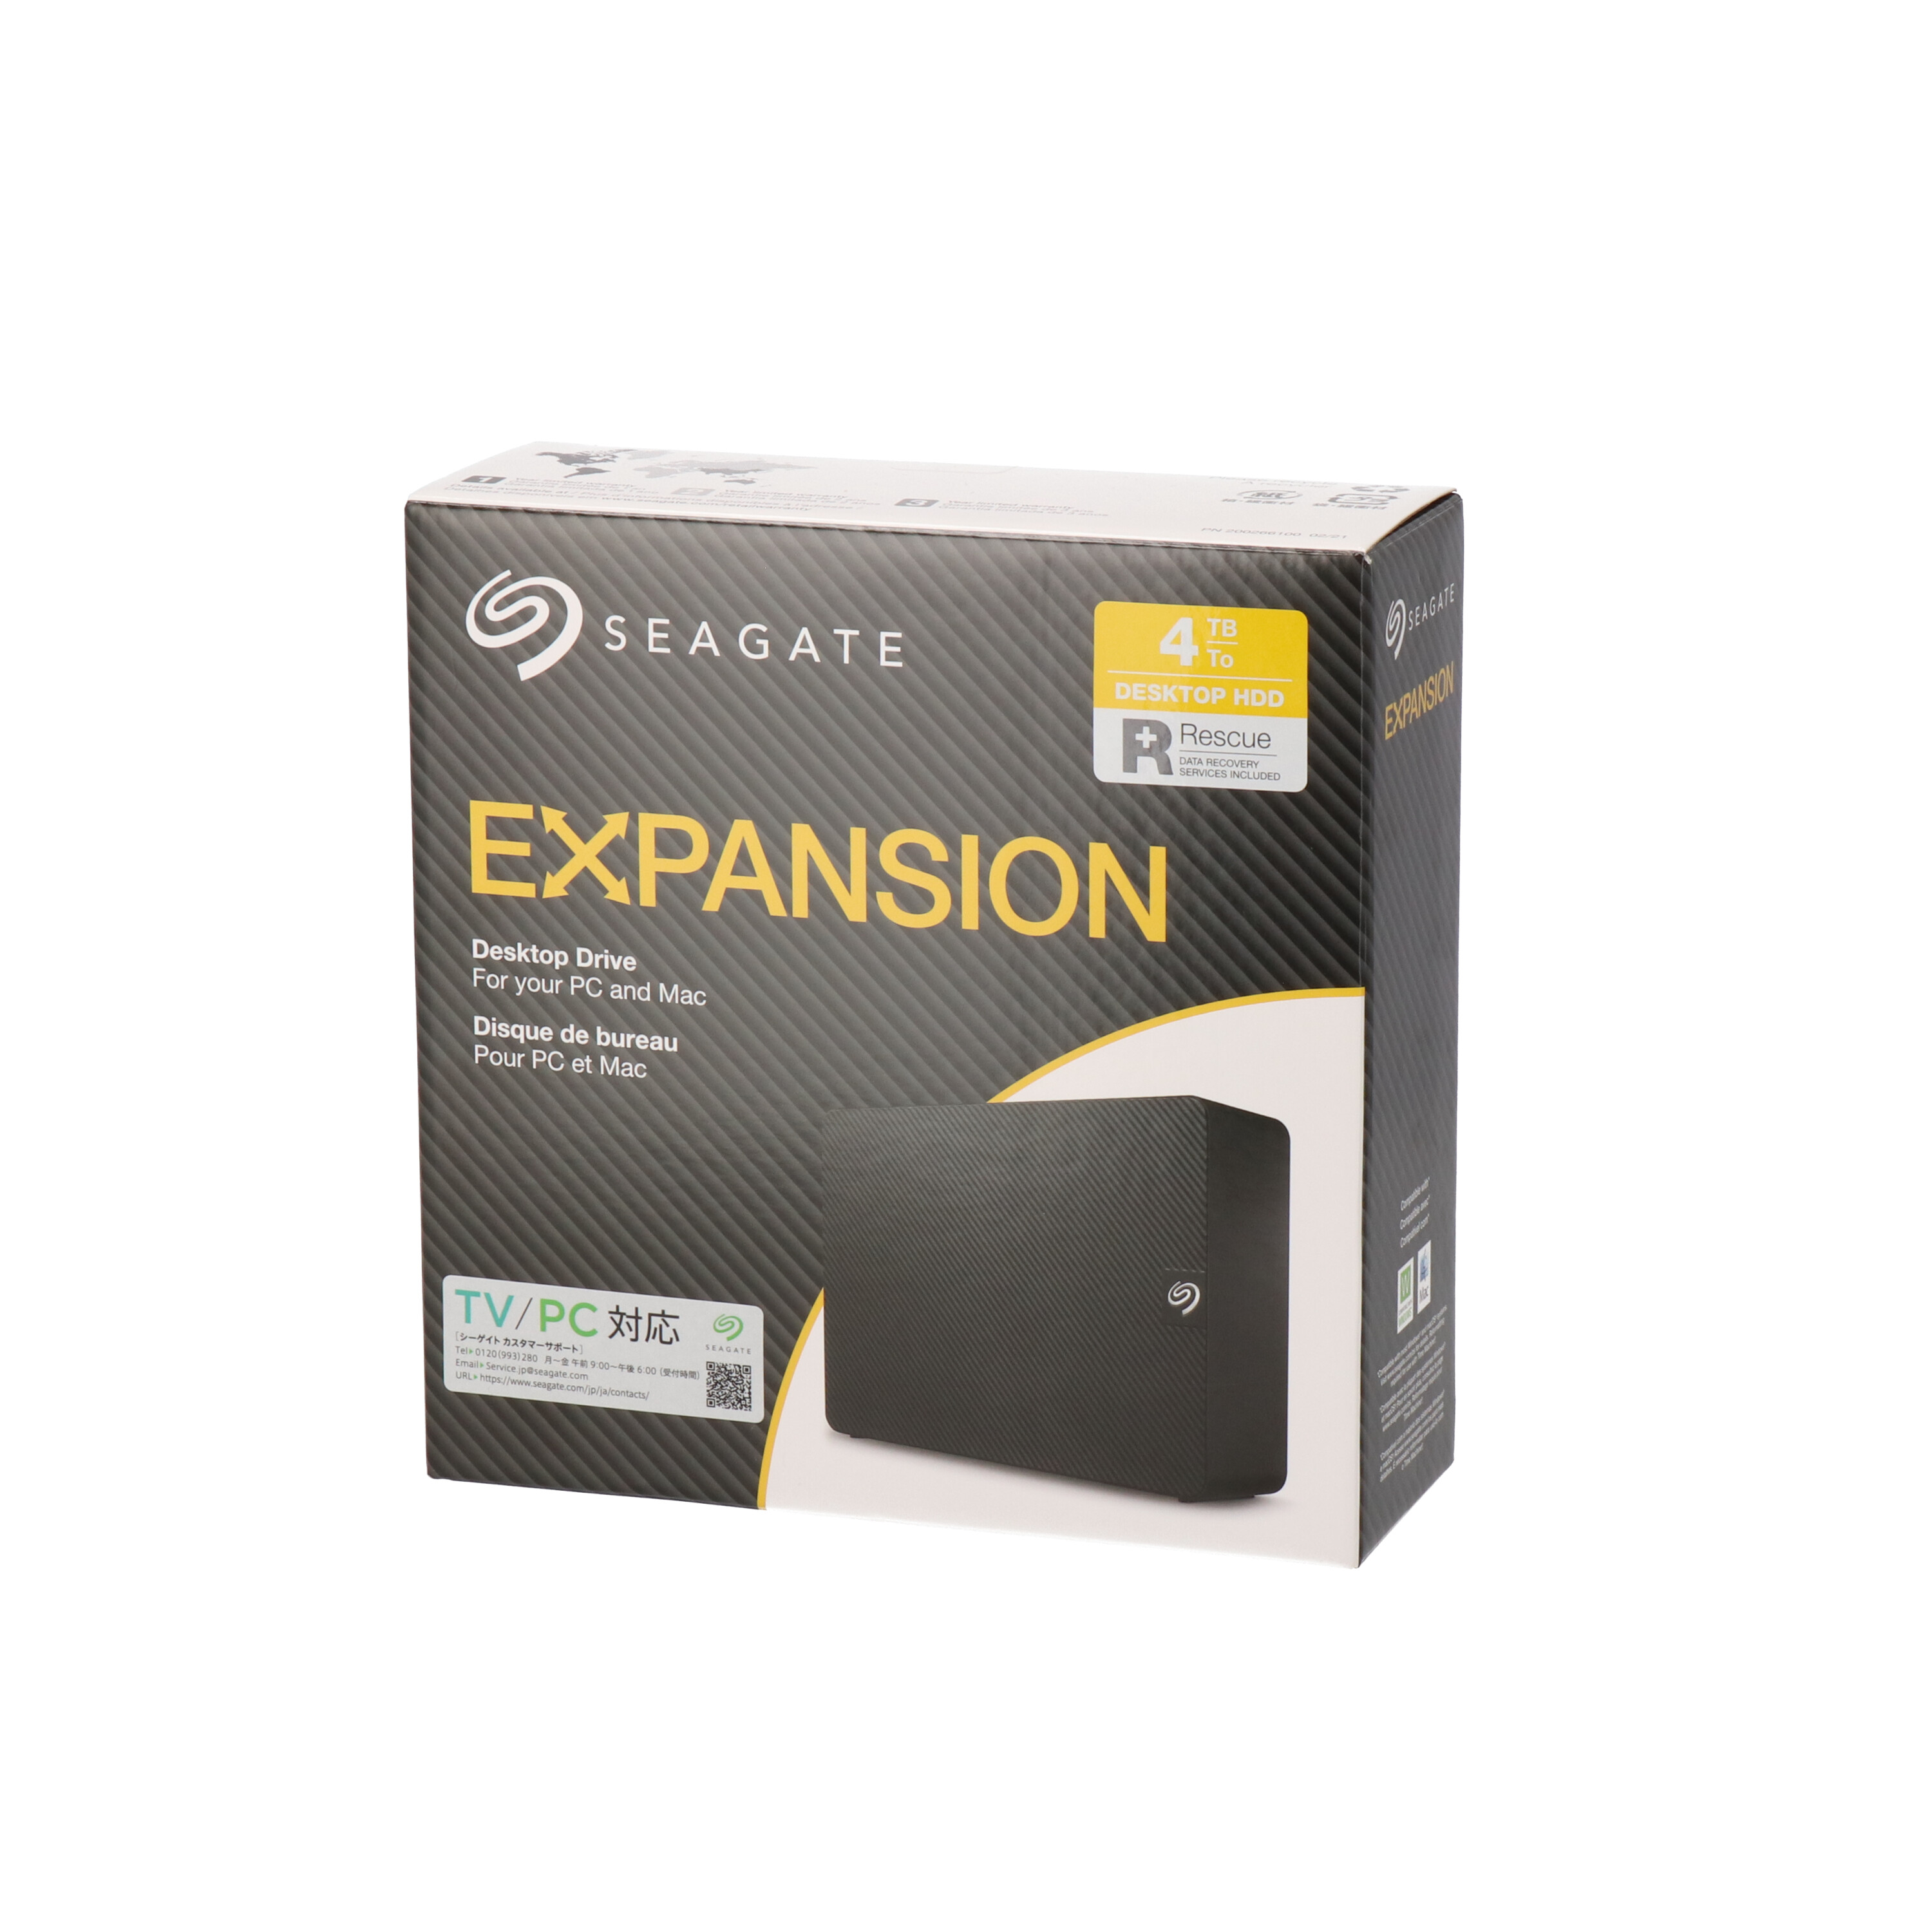 Seagate Expansionデスクトップ・ドライブ STKP4000402をレビュー！口コミ・評判をもとに徹底検証 | マイベスト